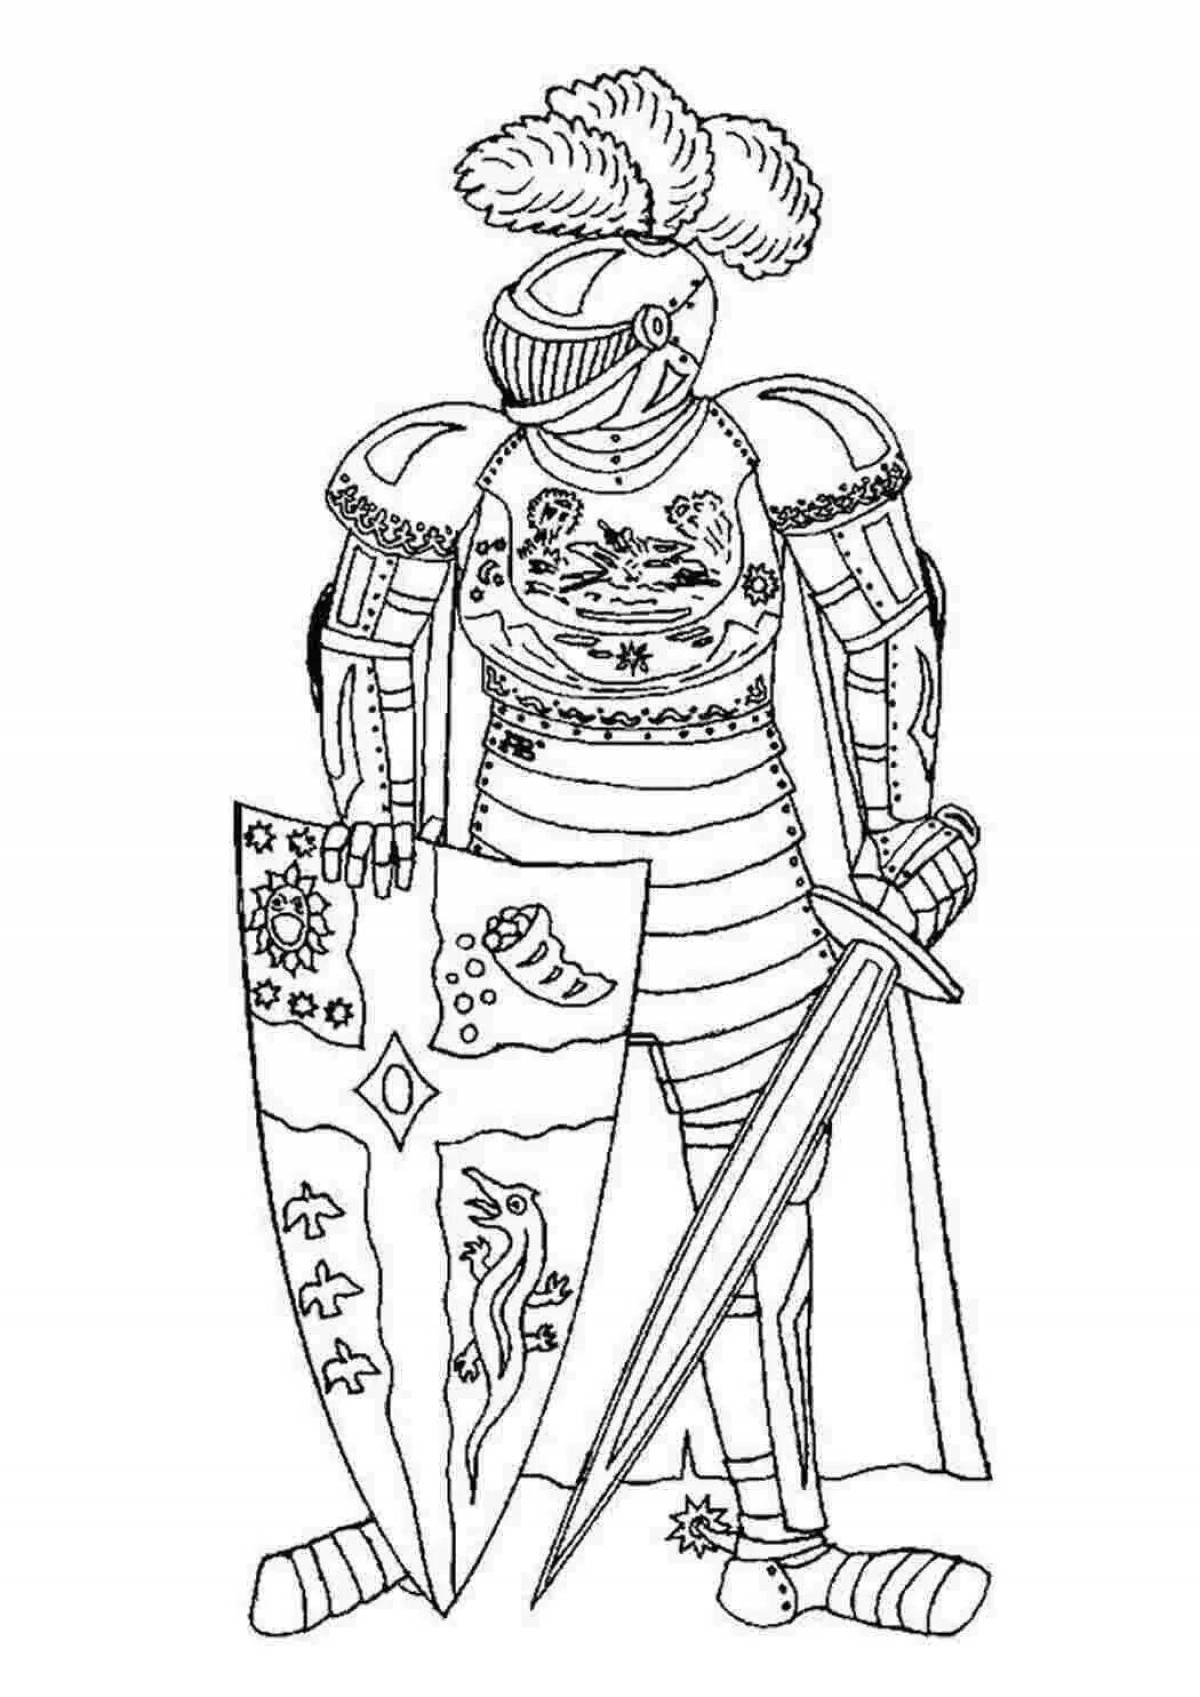 Knight in armor #1